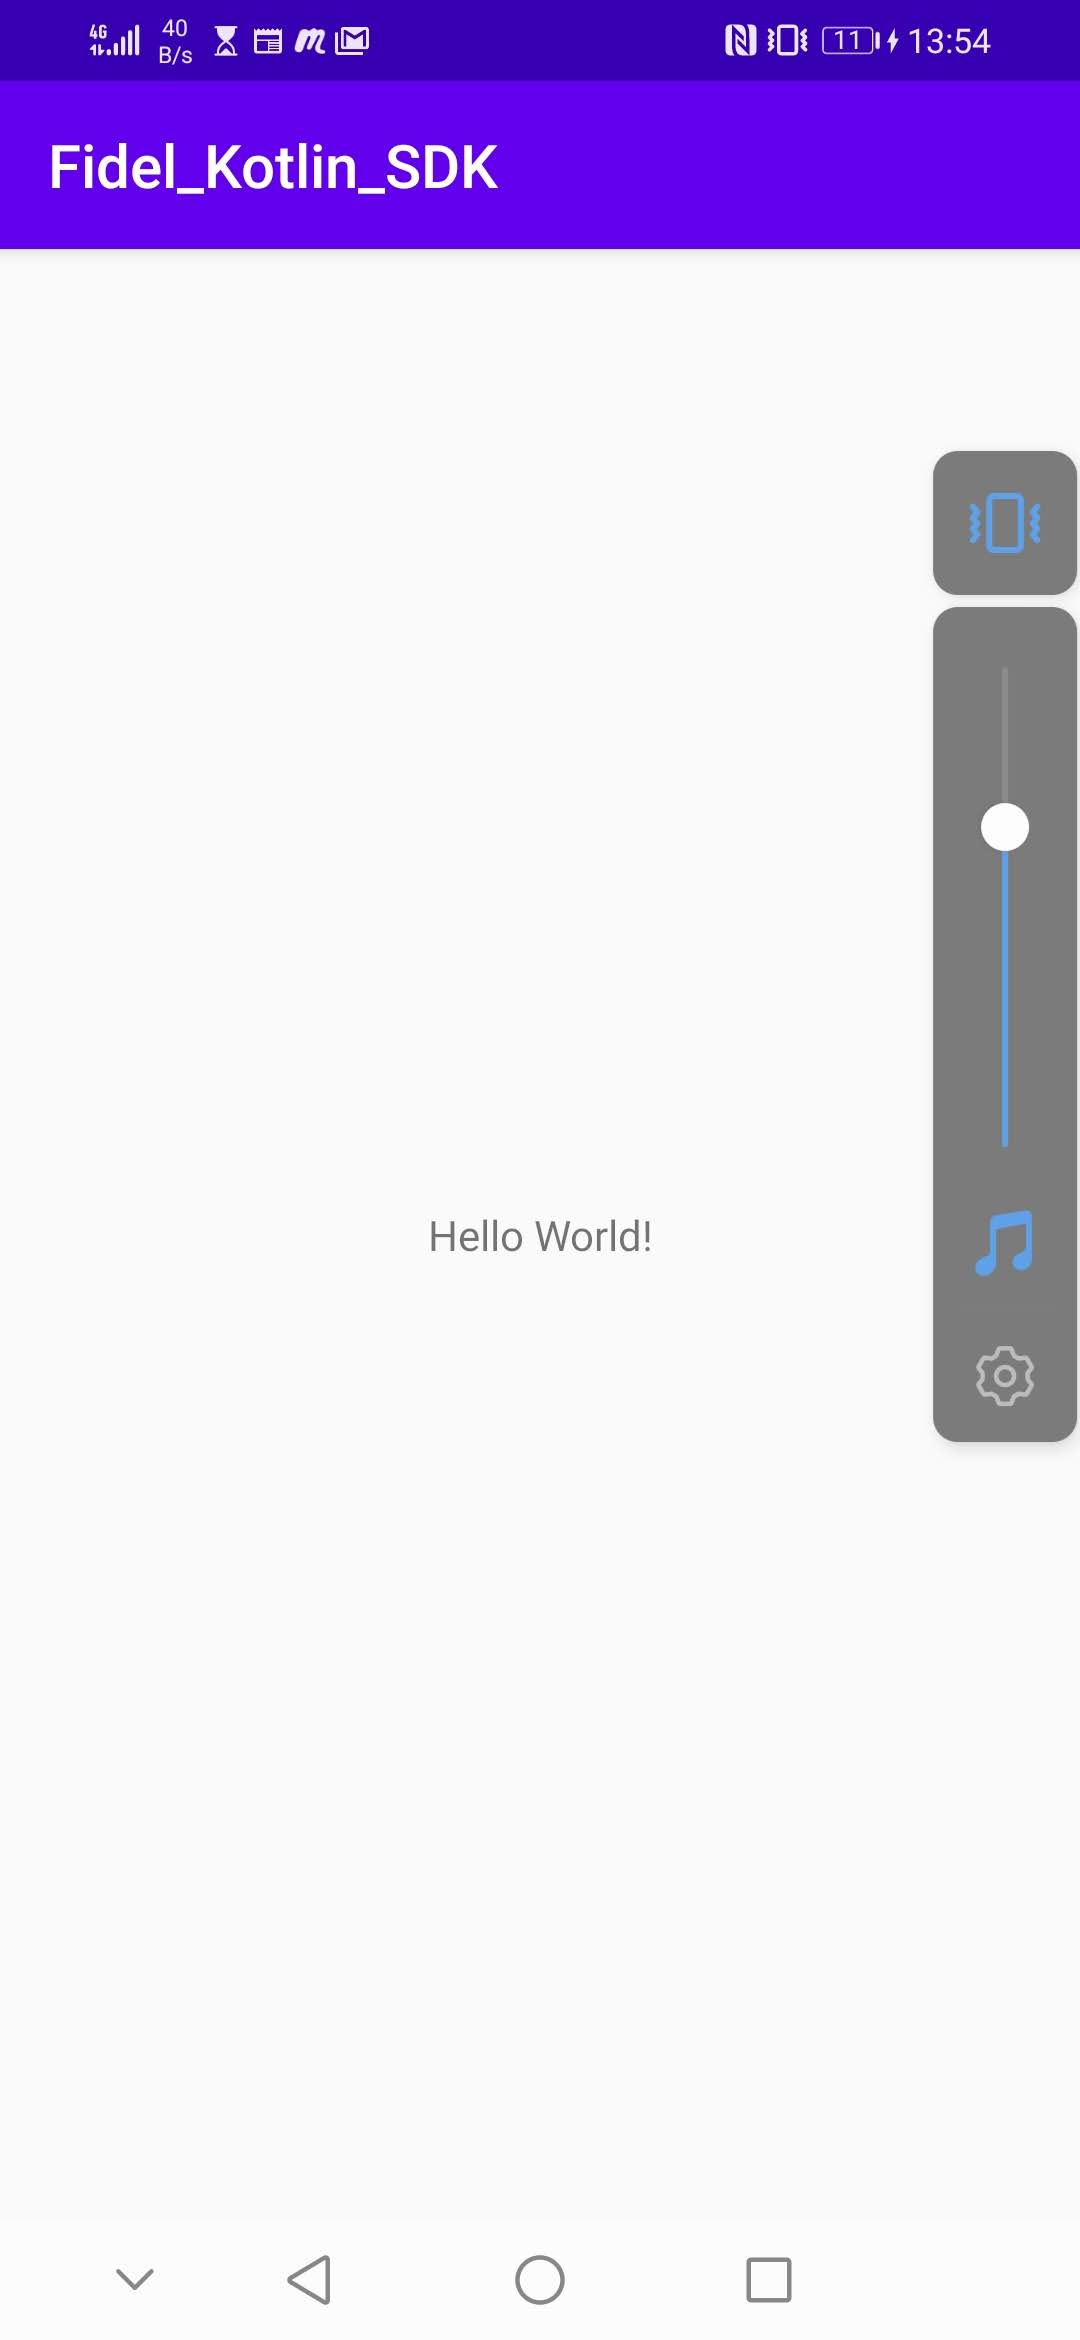 screenshot of app running on phone